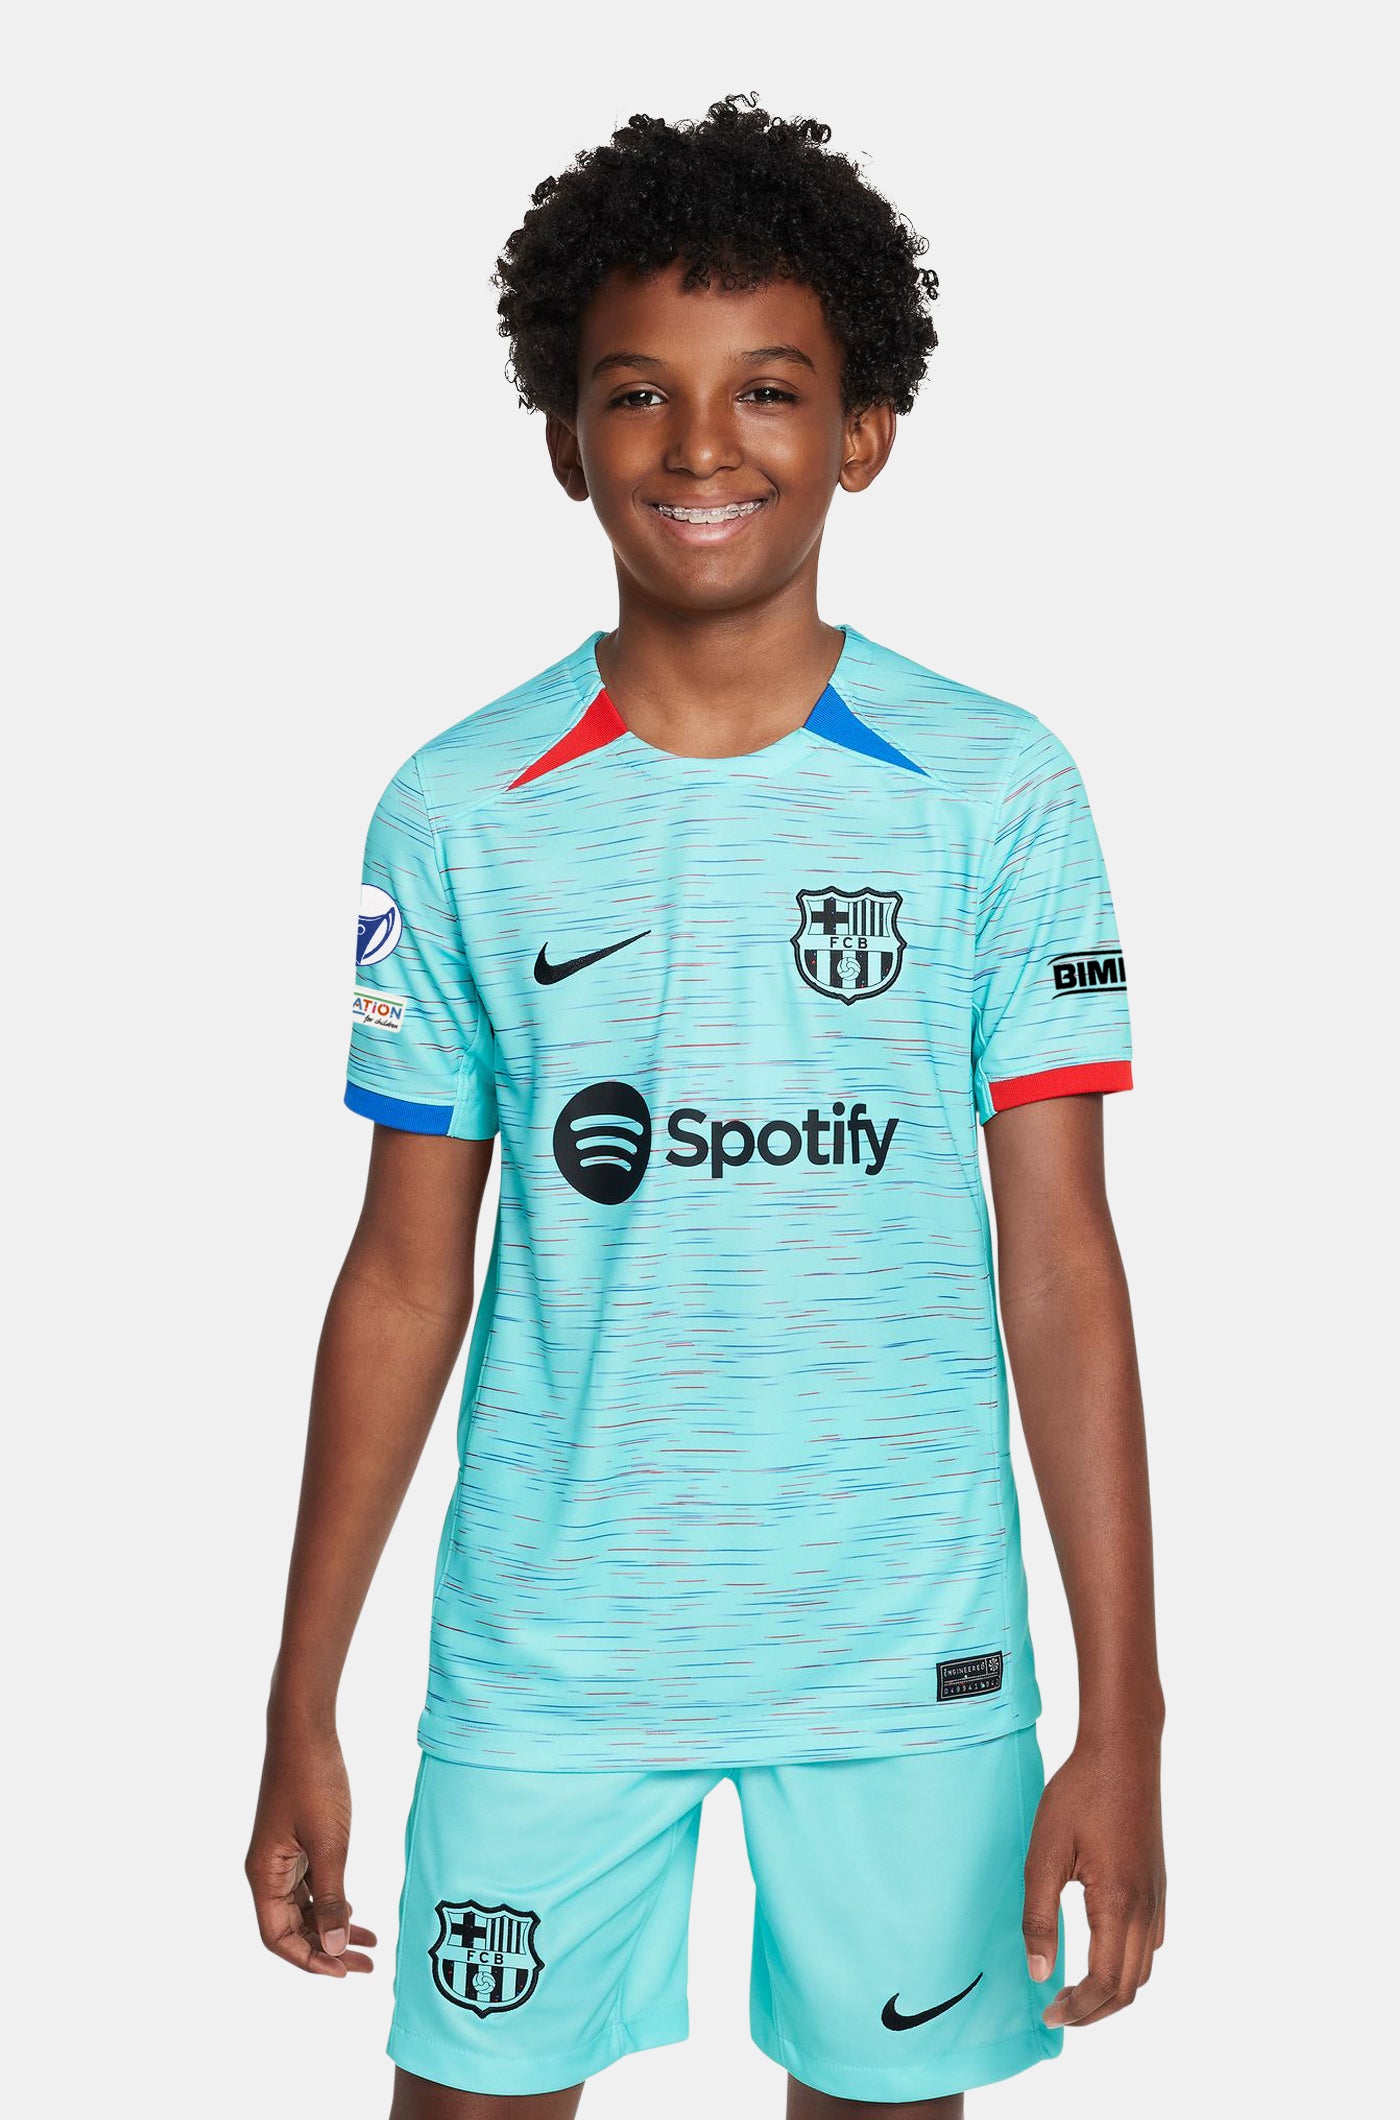 UWCL FC Barcelona third shirt 23/24 – Junior  - PINA